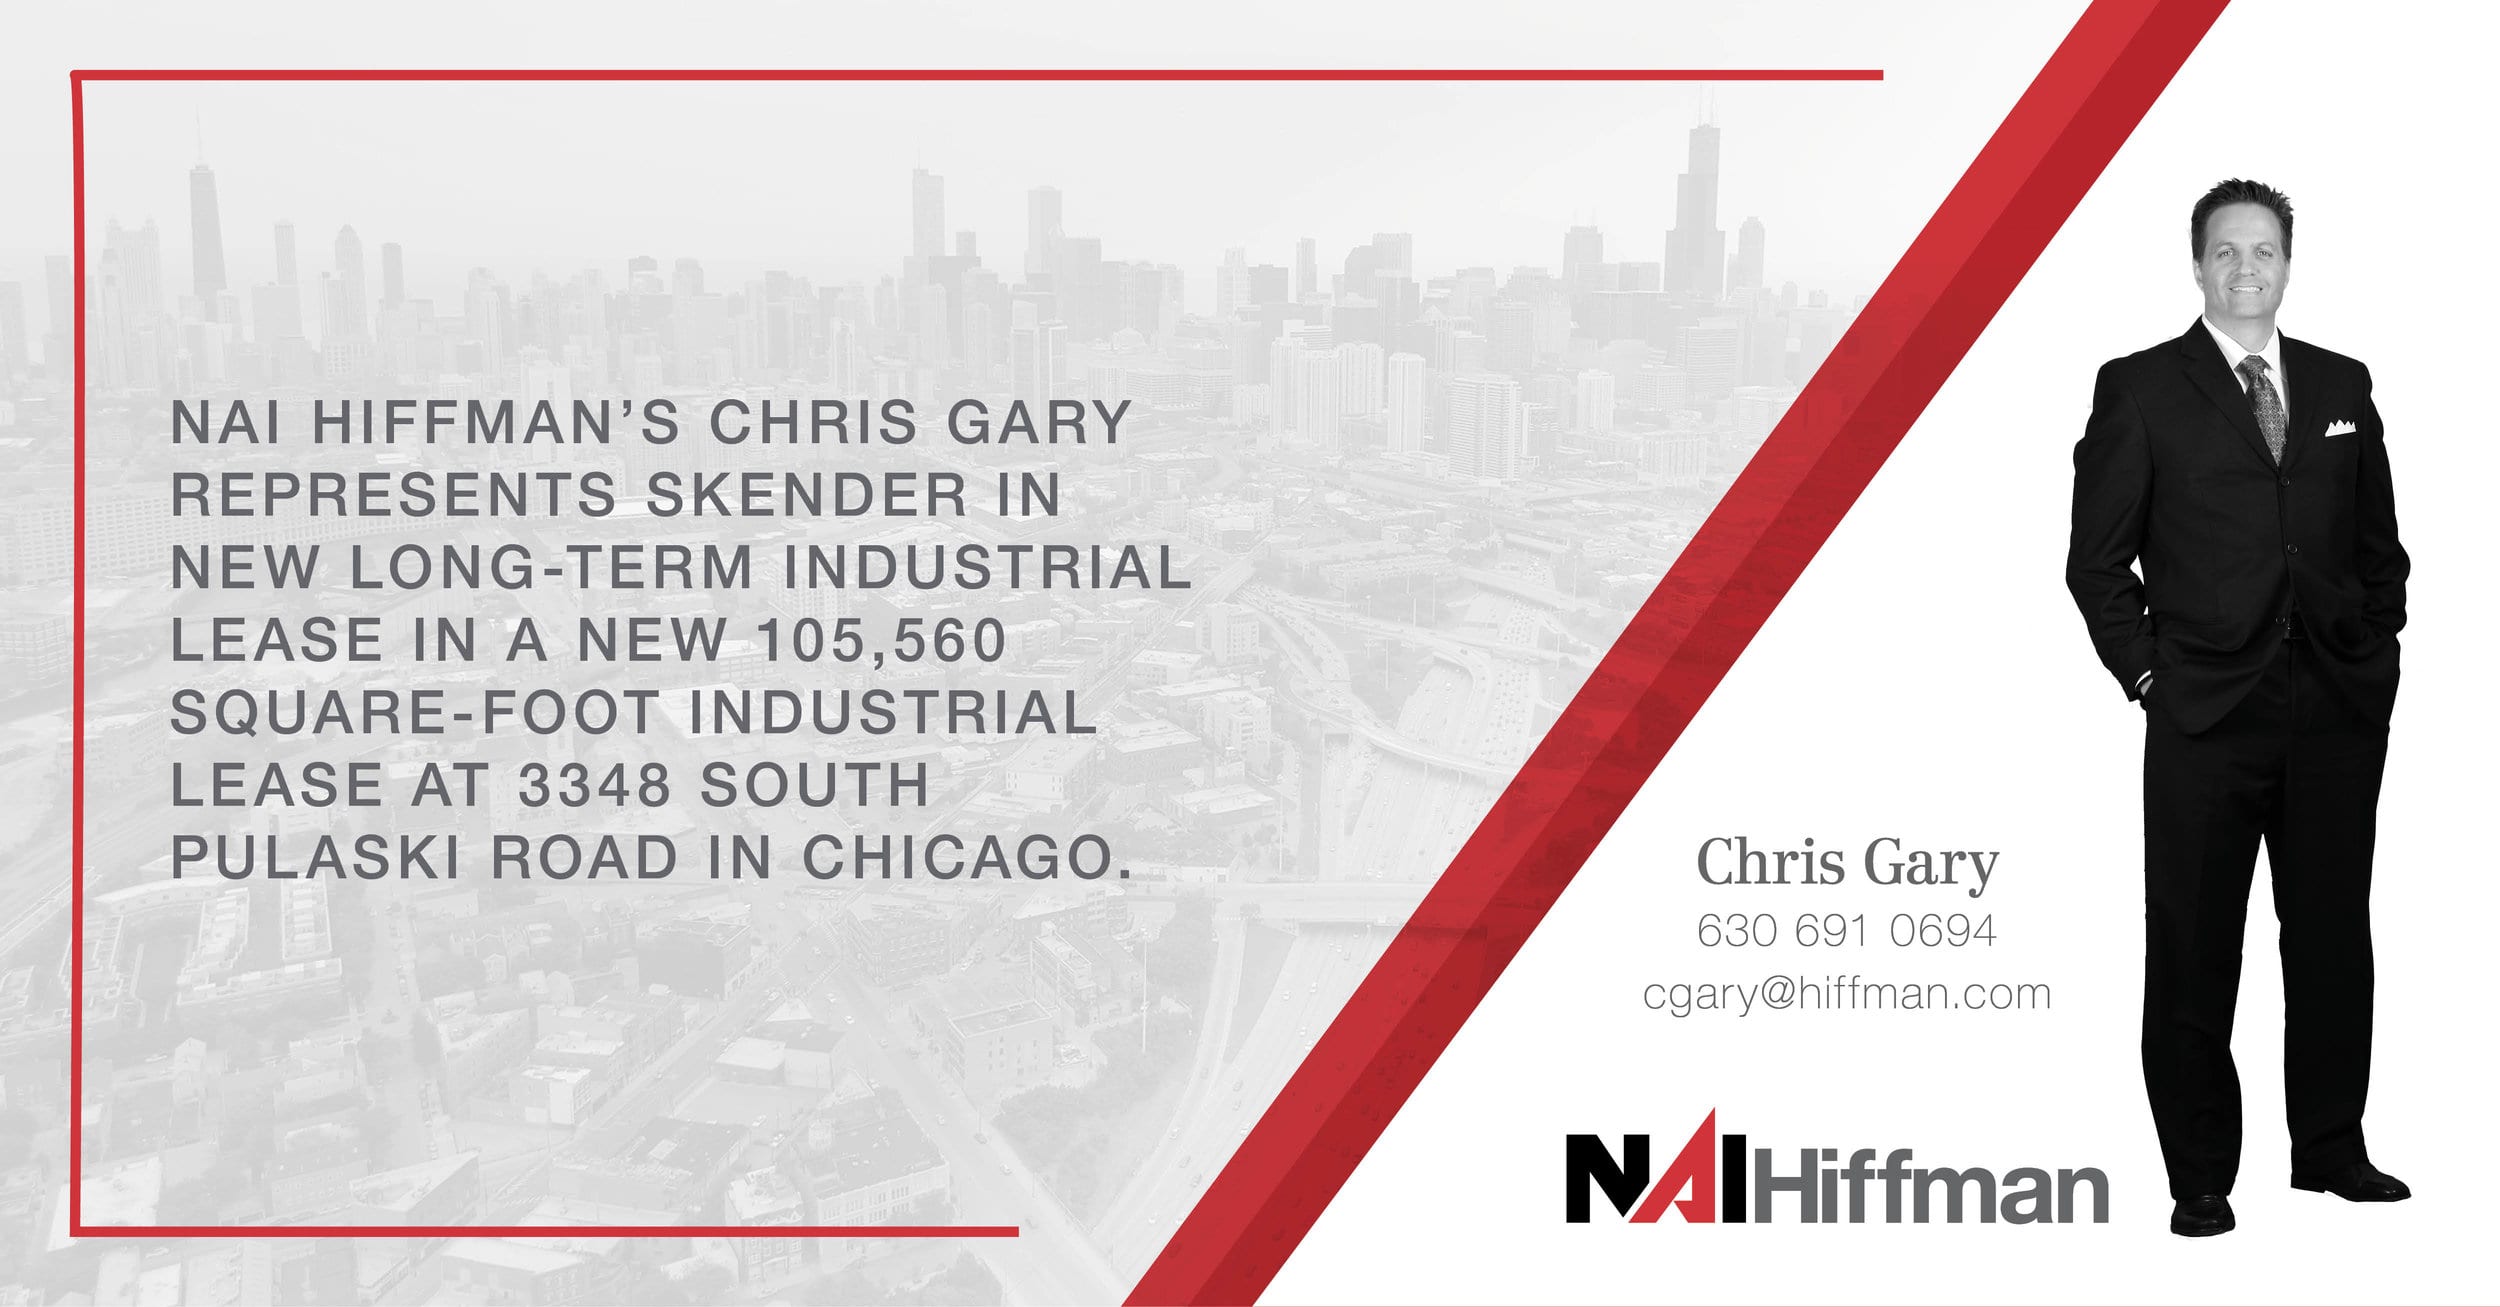 NAI Hiffman’s Chris Gary represents Skender in new long-term industrial lease